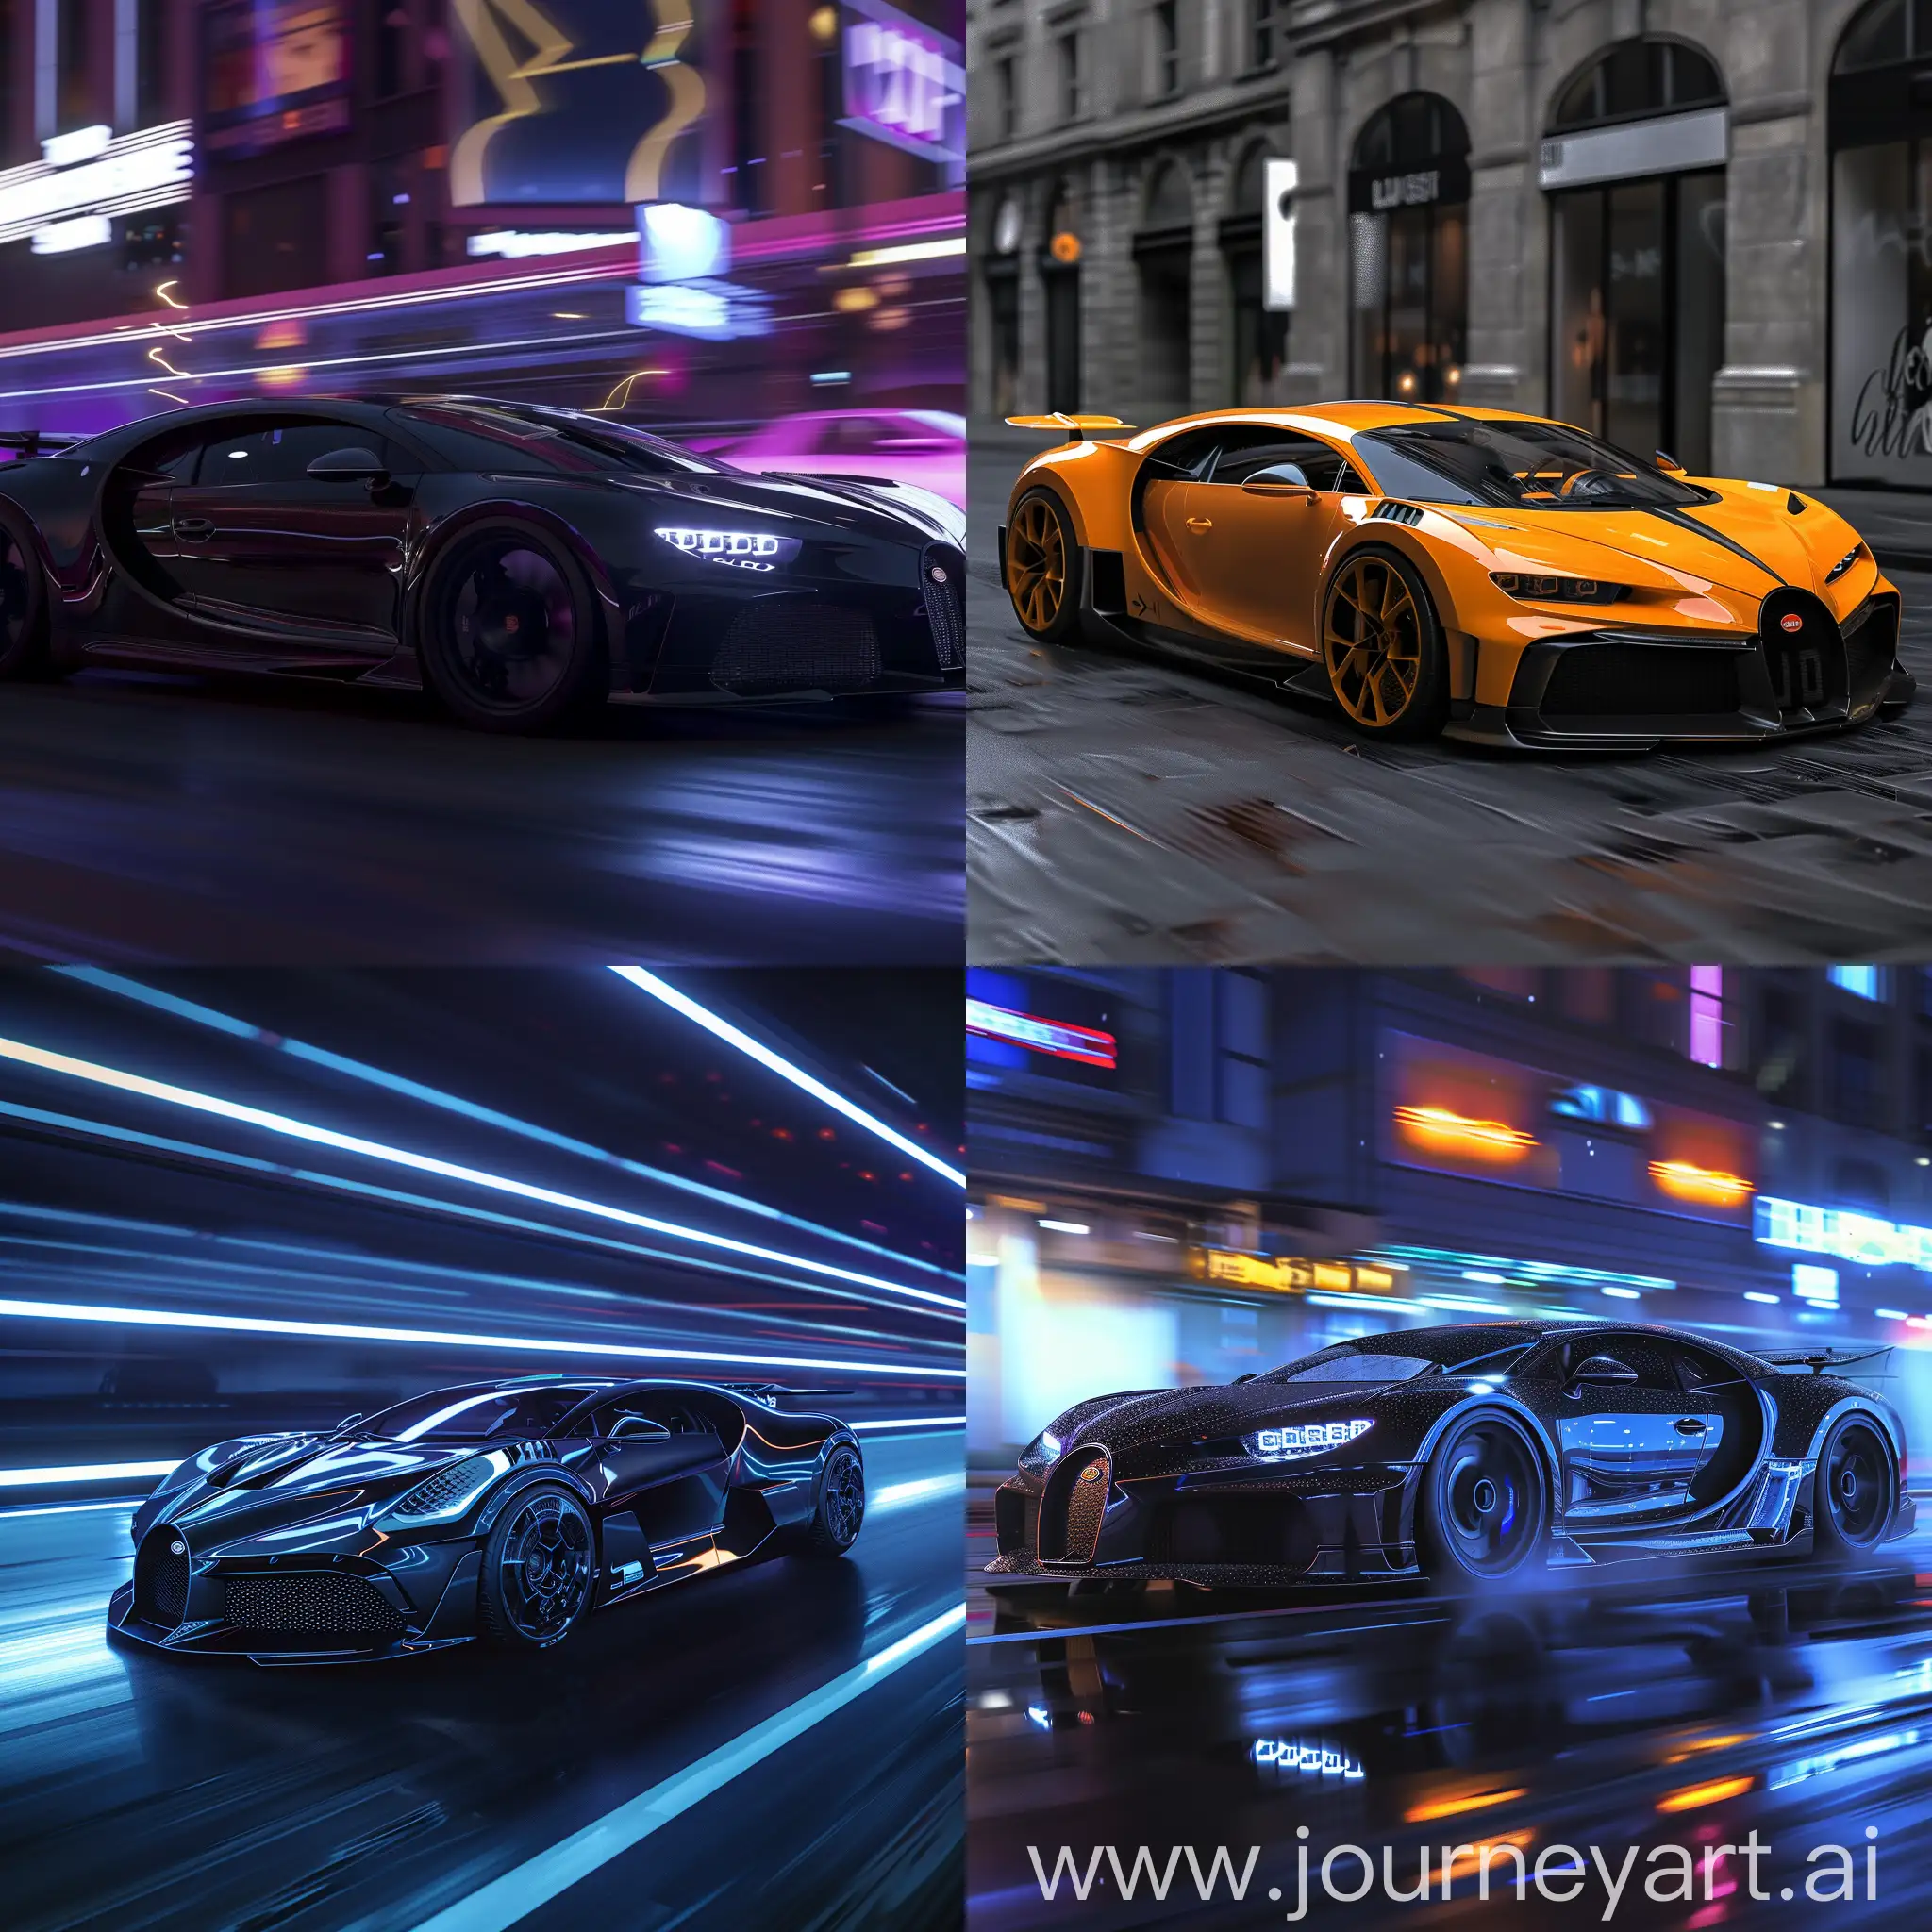 Hybrid-Supercar-Bugatti-Veyron-and-Lamborghini-Huracan-Fusion-in-4K-Ultra-High-Definition